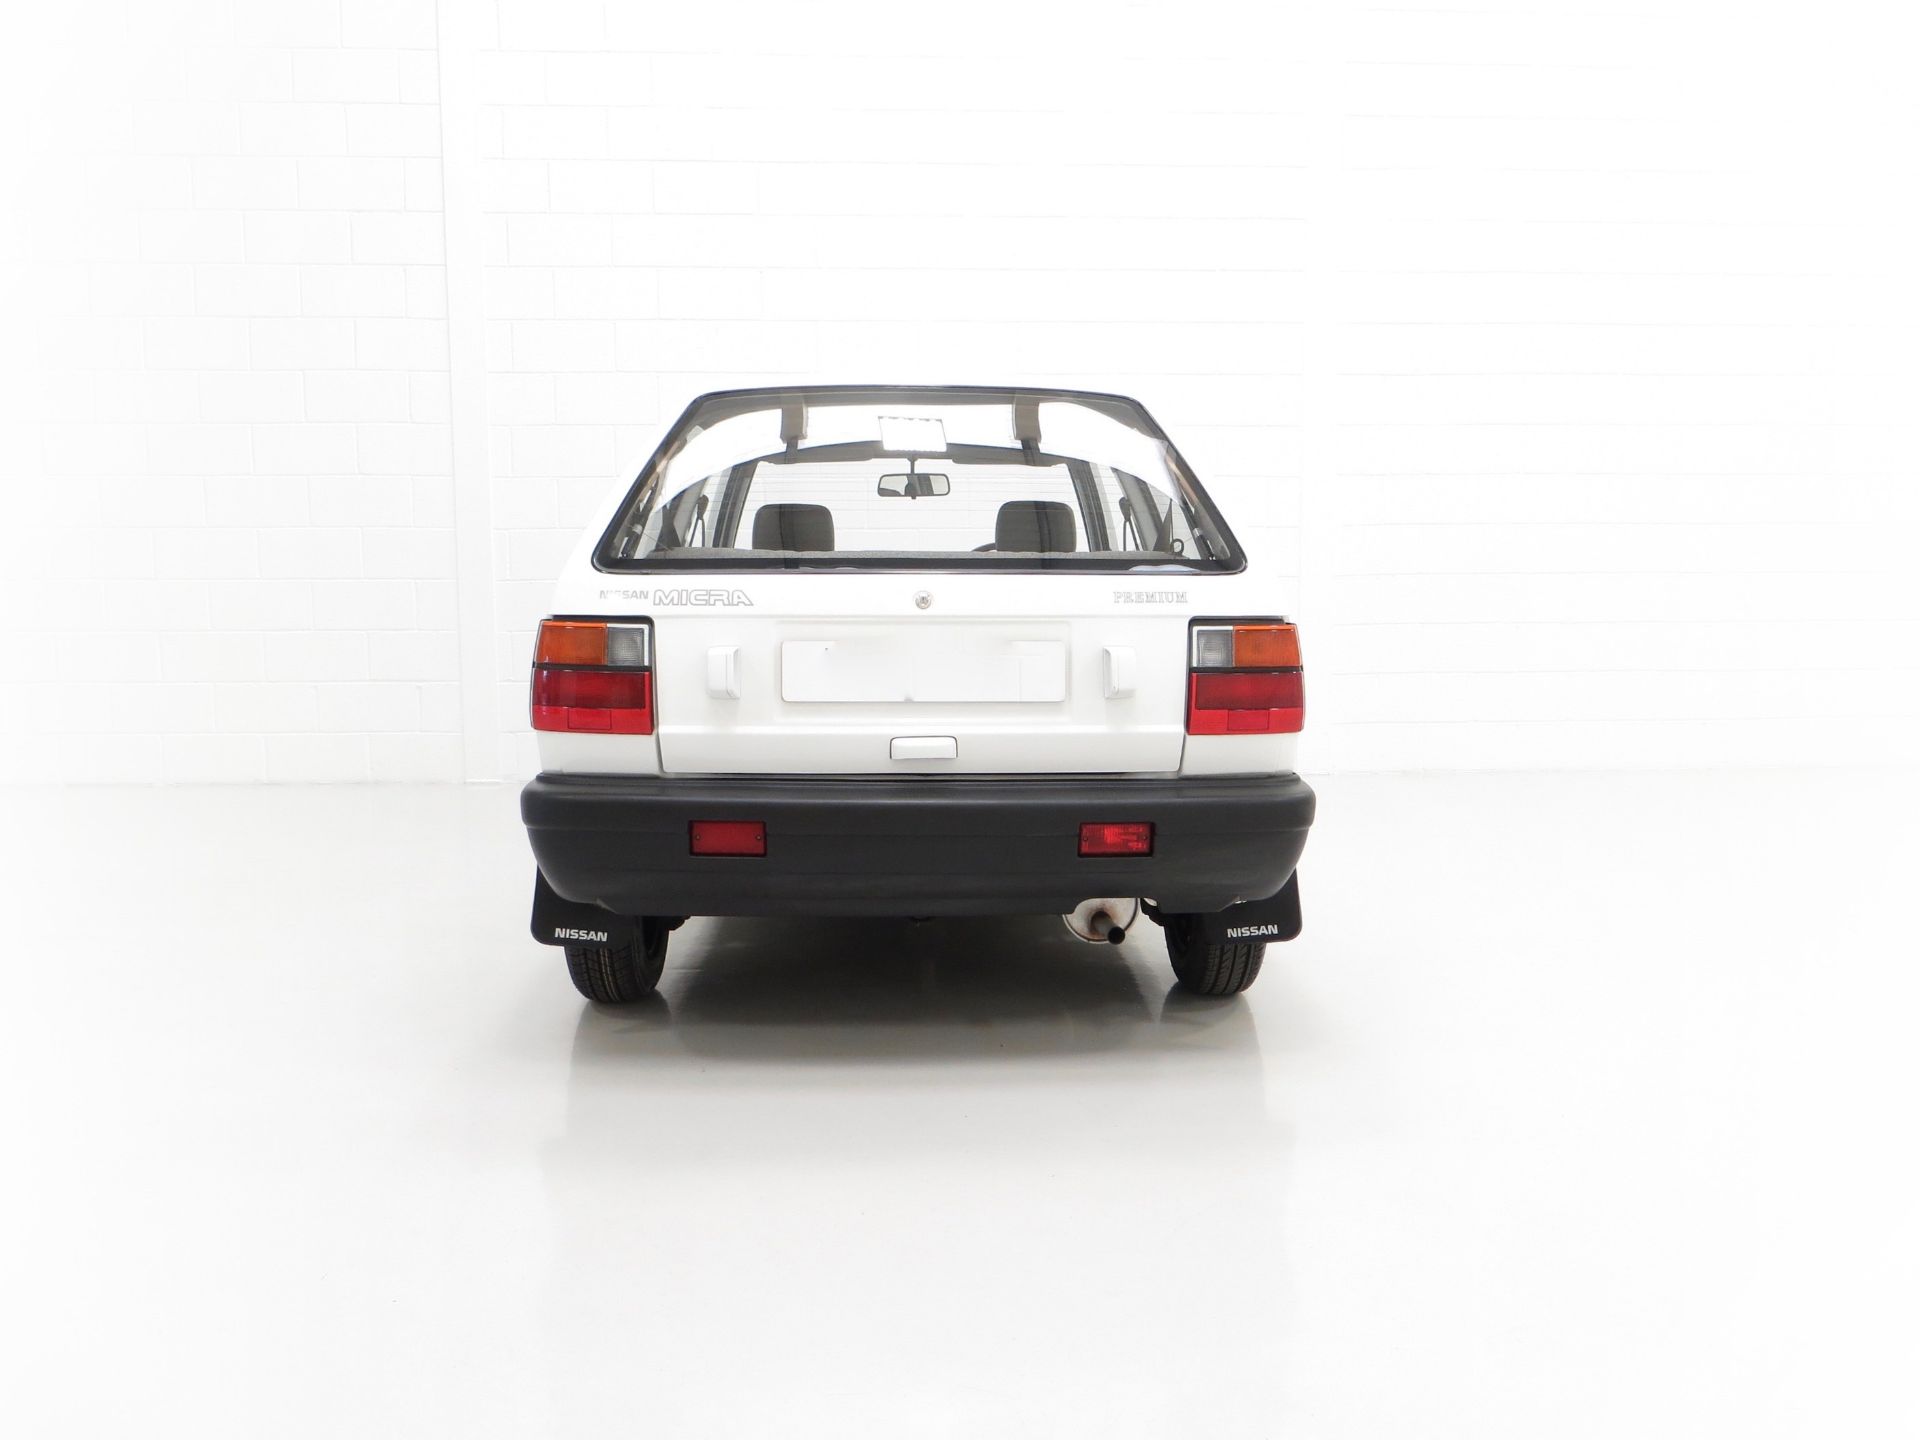 1991, Nissan Micra 1.0 Premium - Image 17 of 118